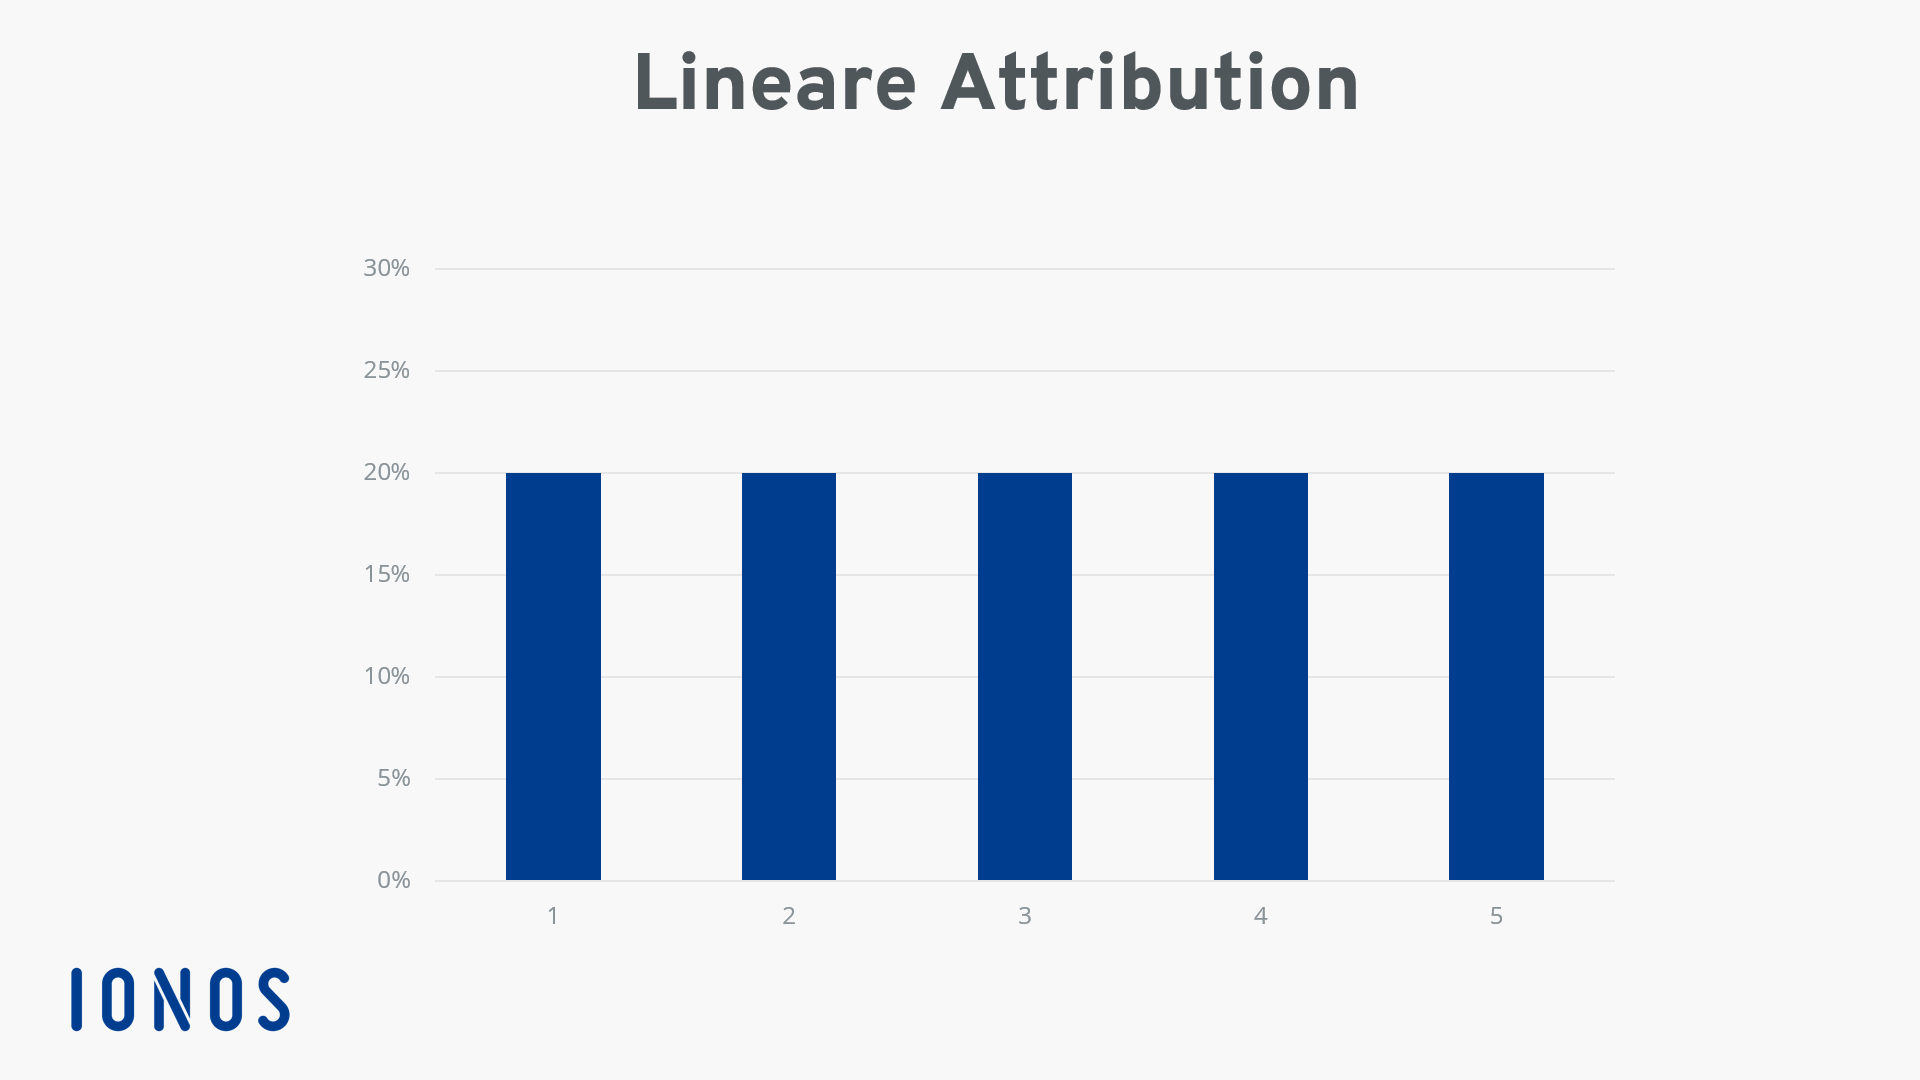 Lineare Attribution